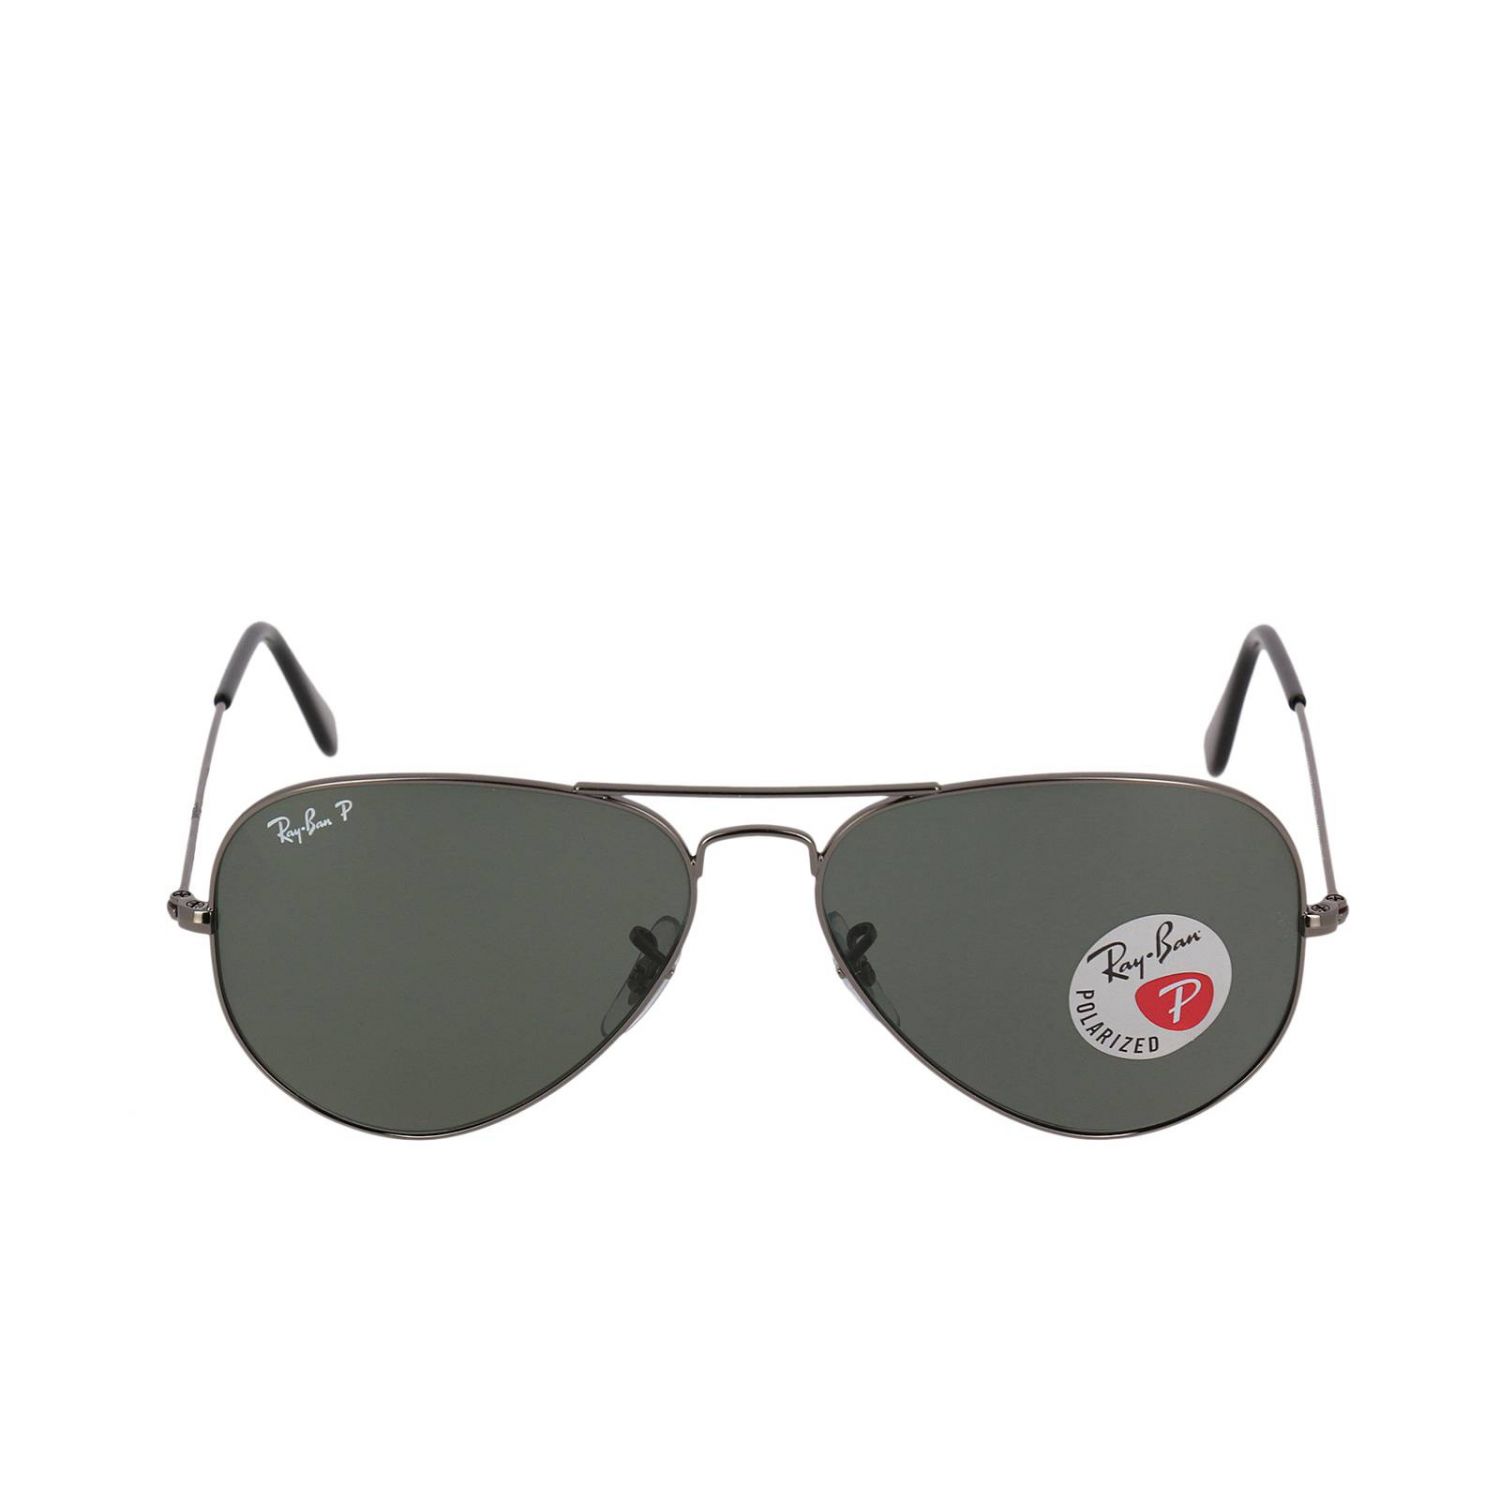 Glasses Ray-Ban: Sunglasses women Ray-ban green 2